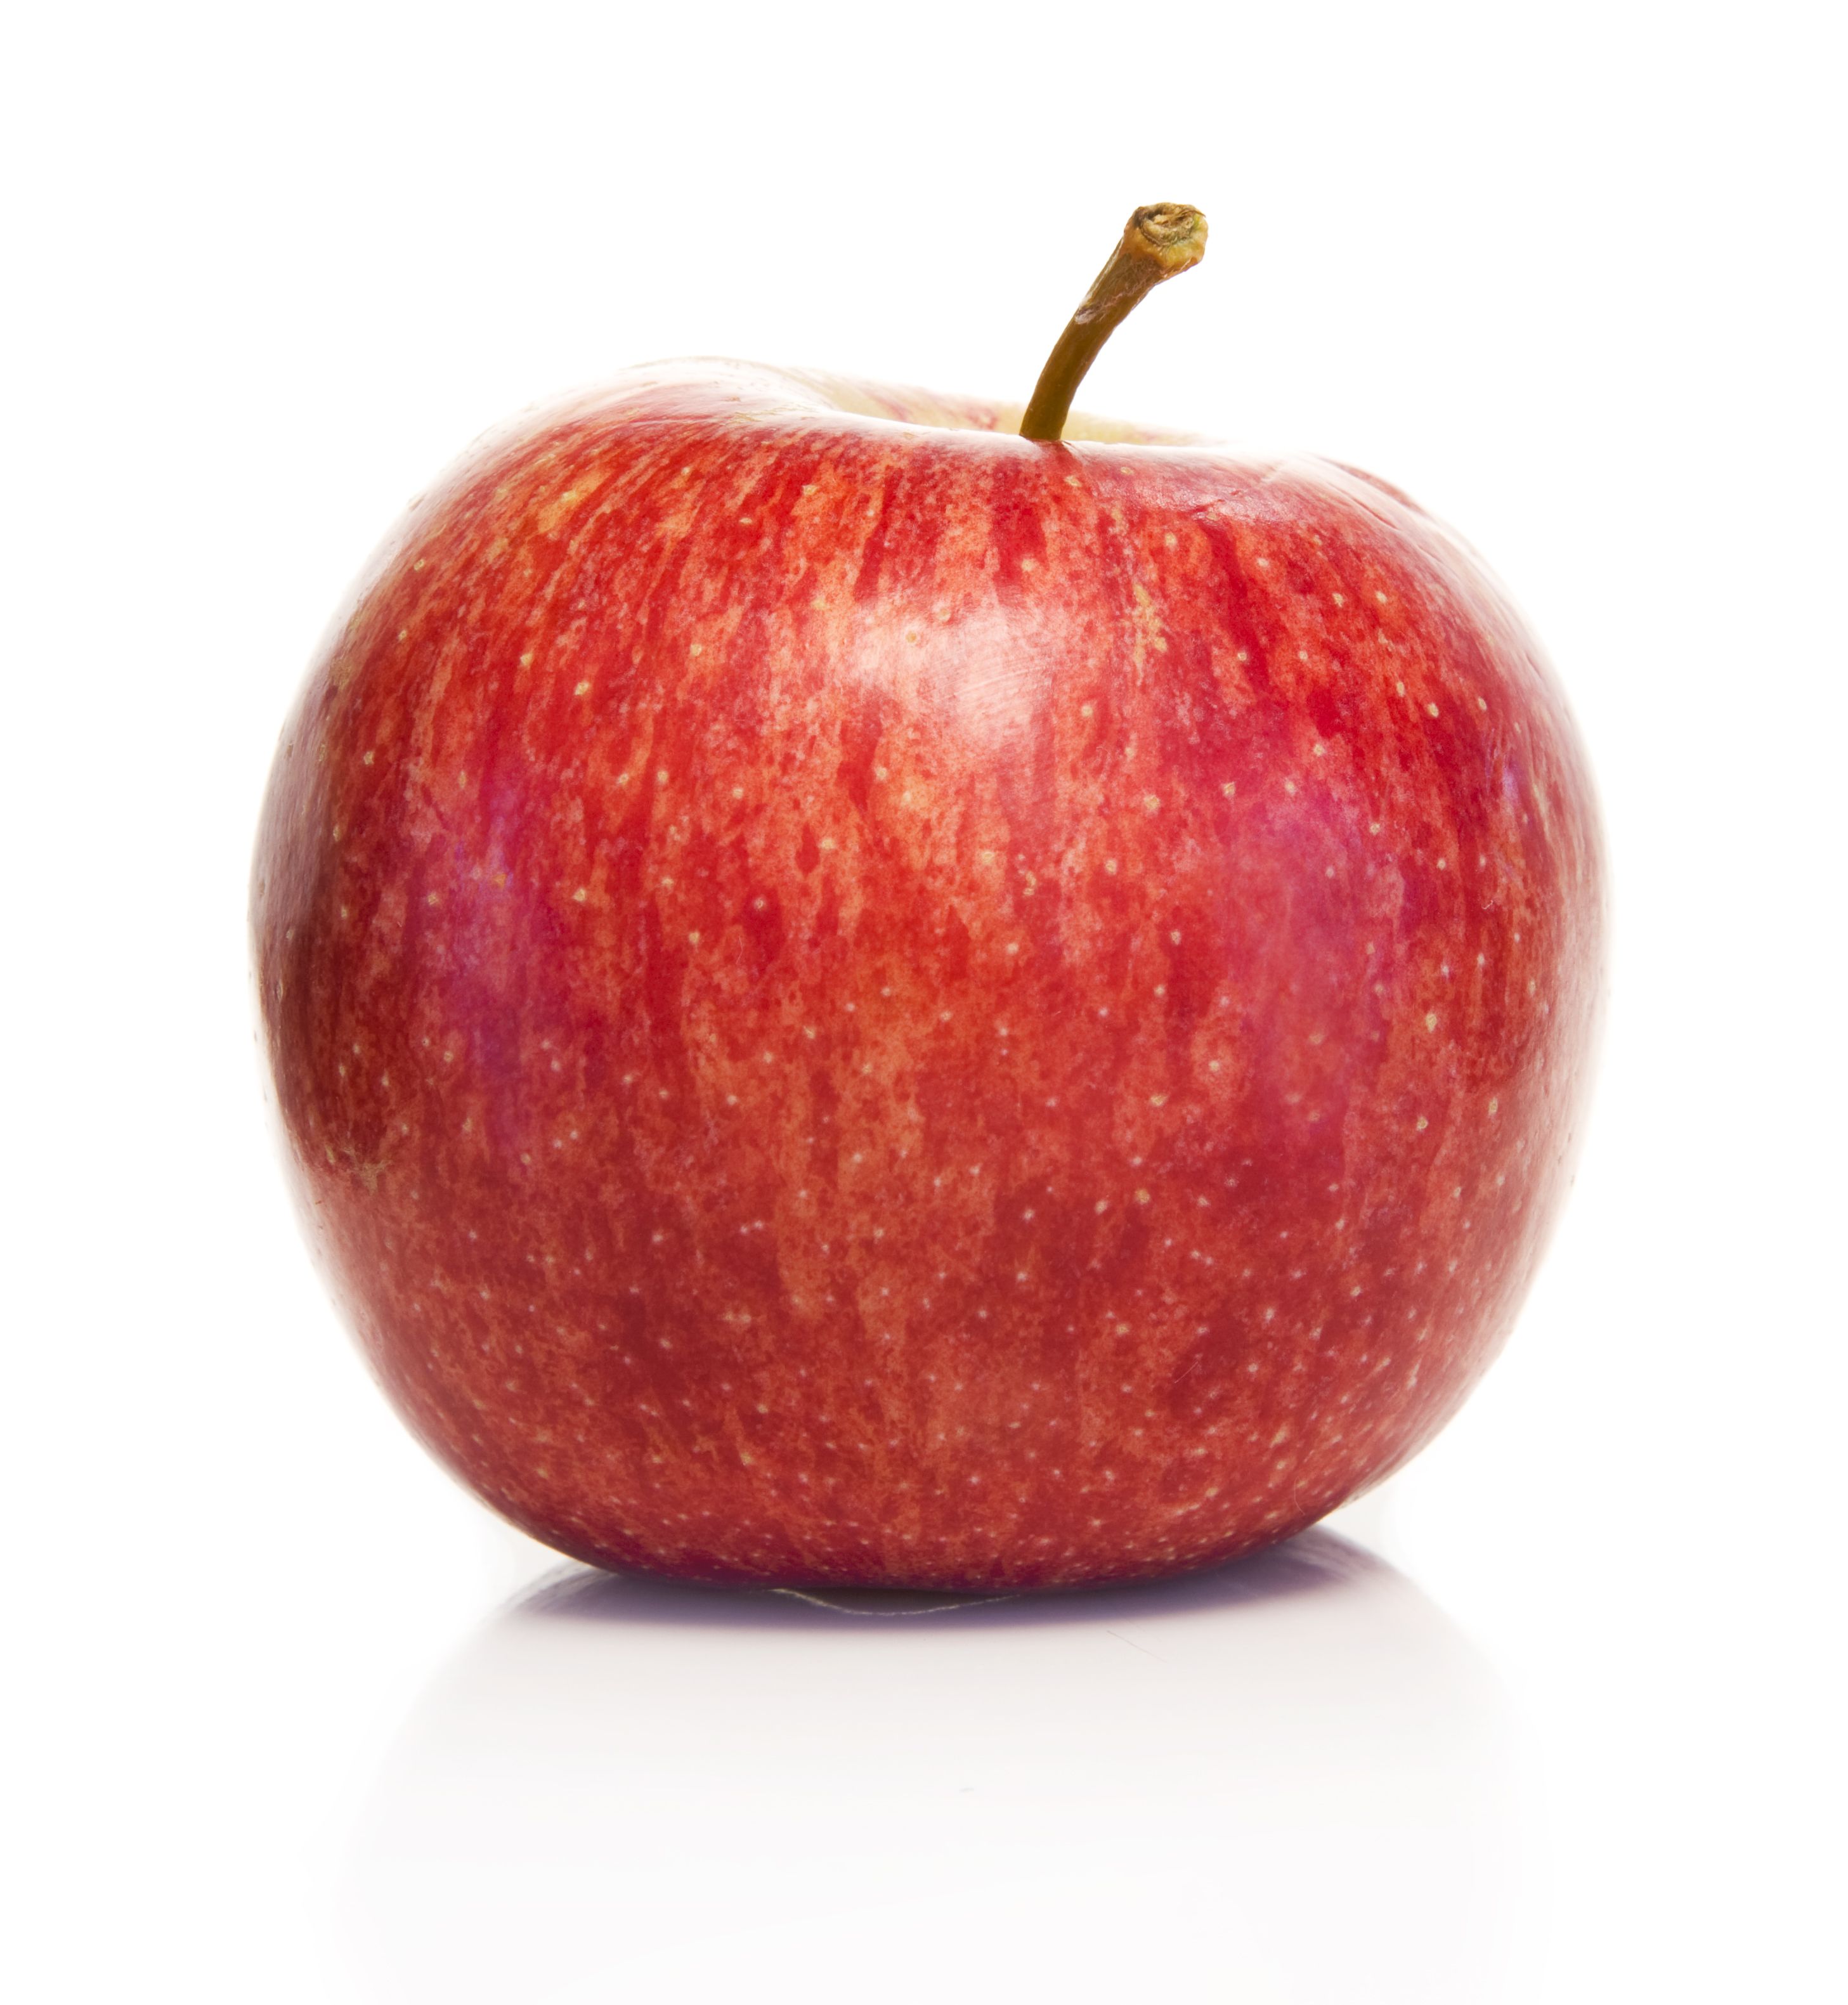 https://hips.hearstapps.com/hmg-prod/images/red-fresh-apple-isolated-on-white-background-royalty-free-image-1627314996.jpg